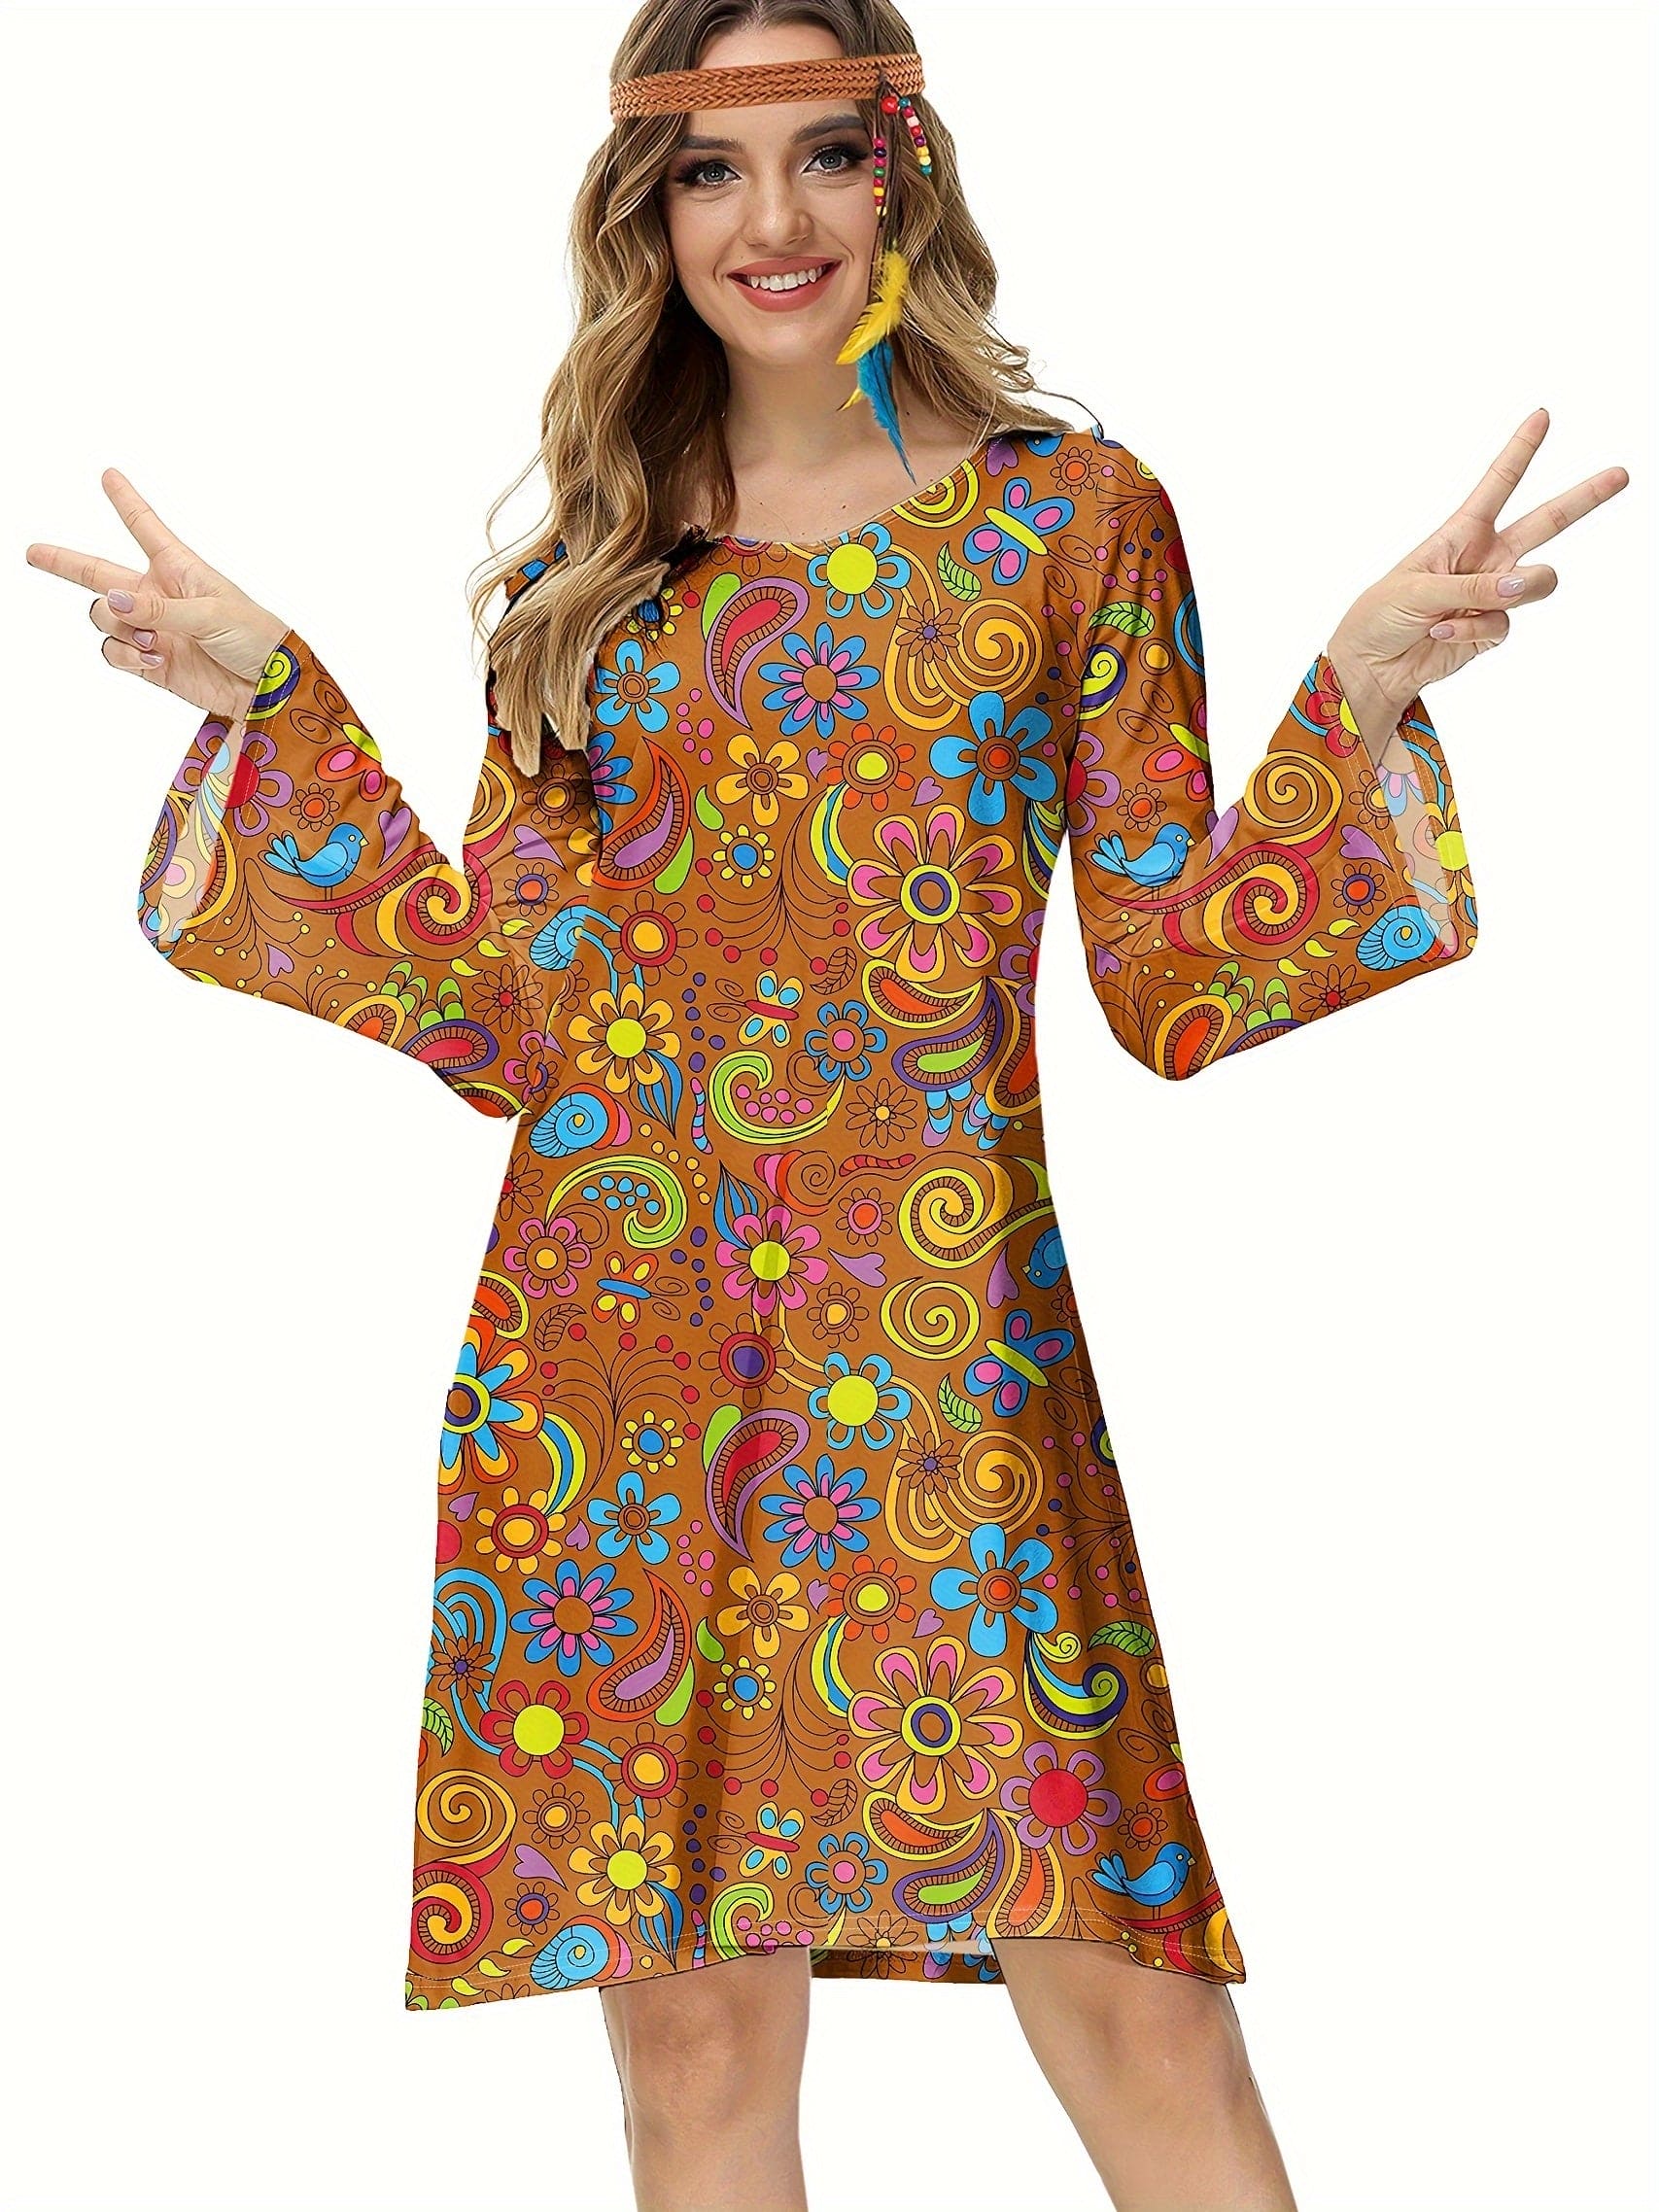 Hippie Floral Print Dress, Vintage V Neck Flared Sleeve Carnival Costume, Women's Clothing